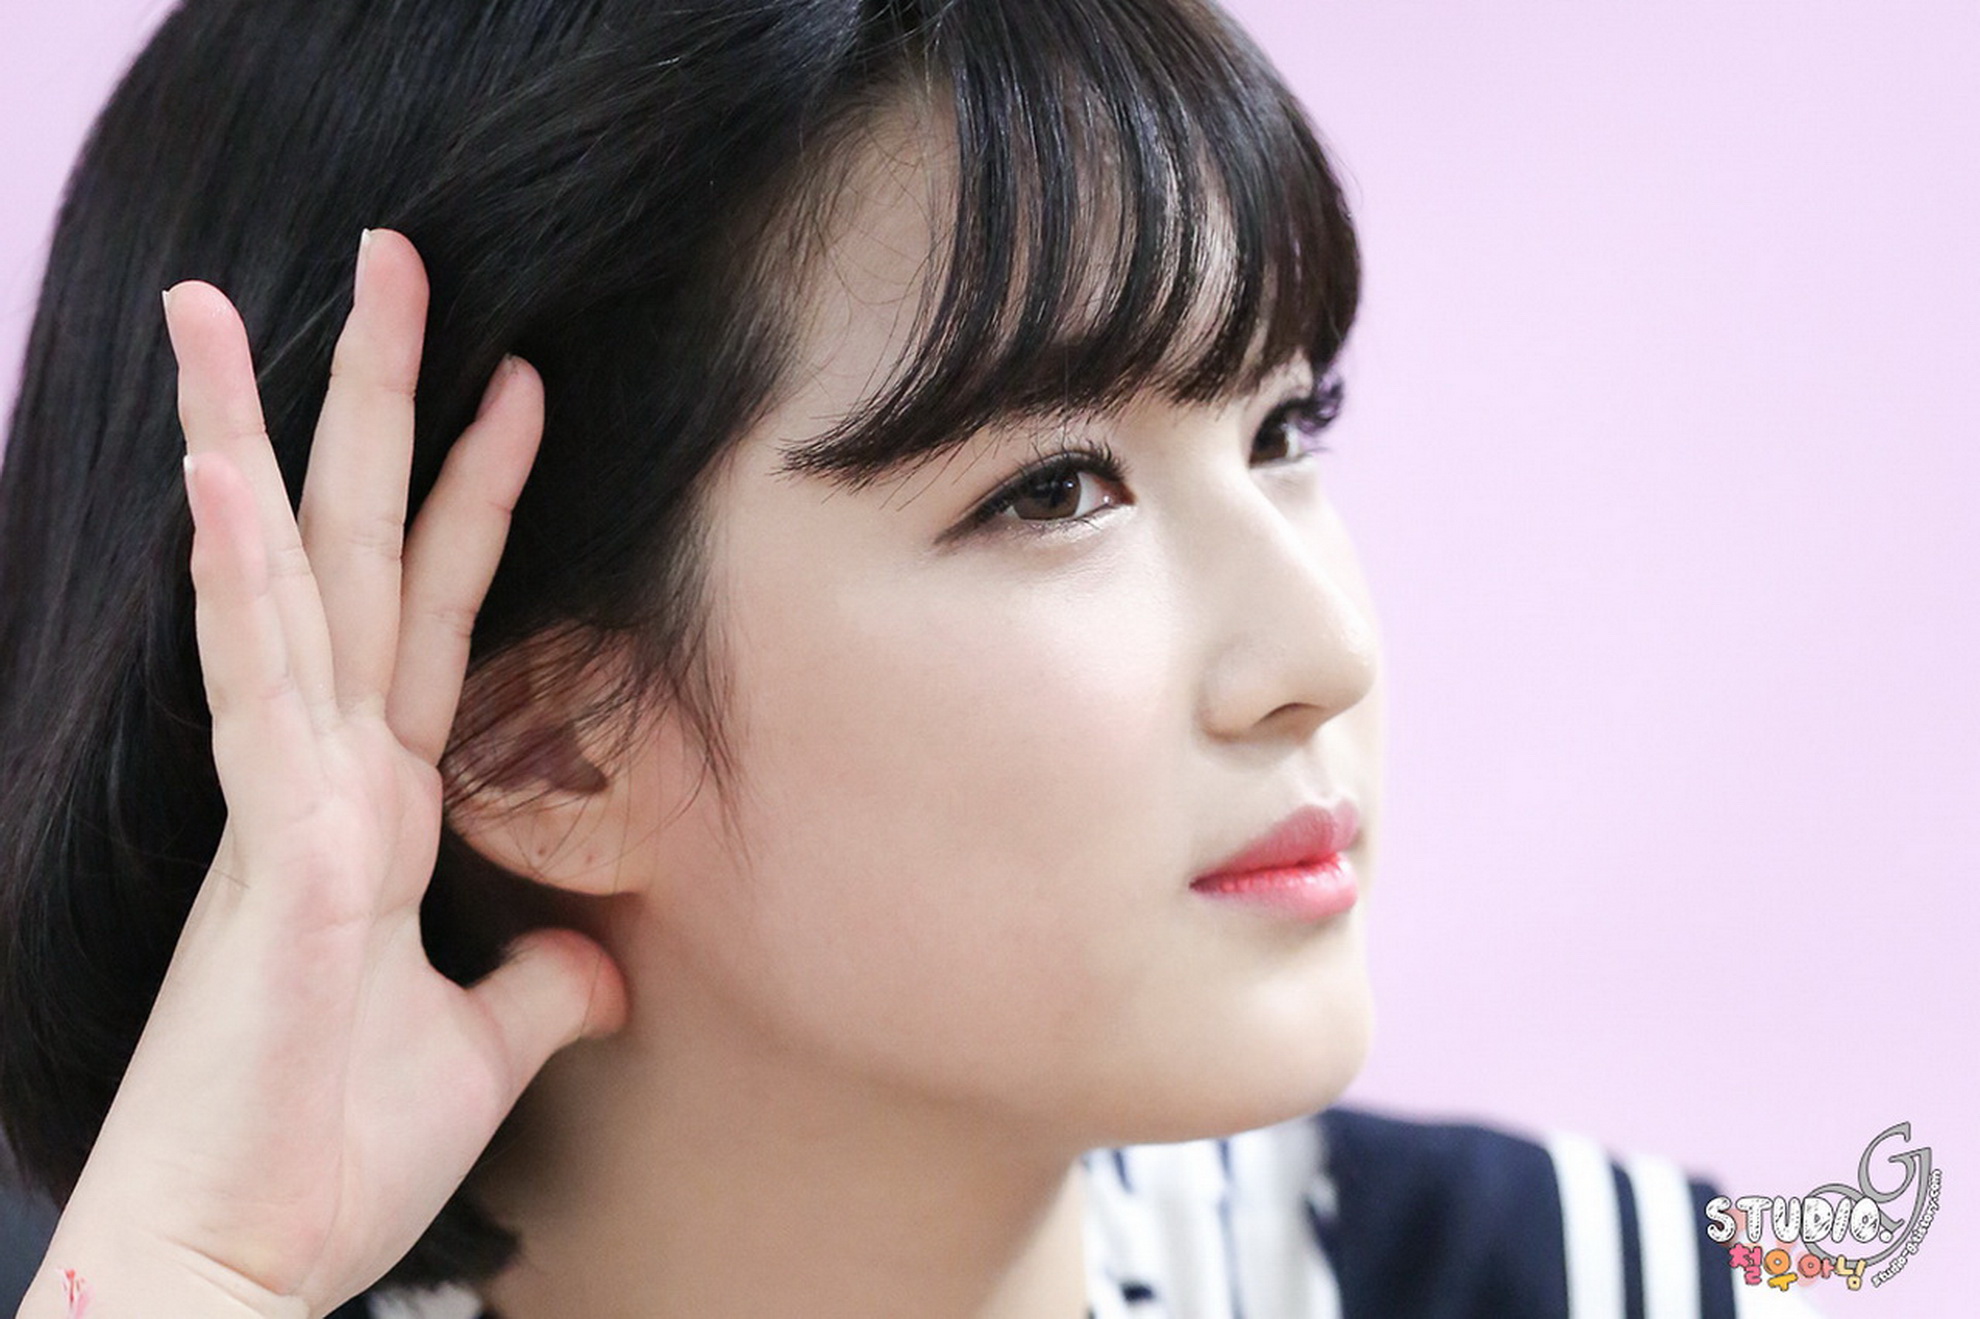 Baixar papel de parede para celular de Música, Girl Group Coreano gratuito.